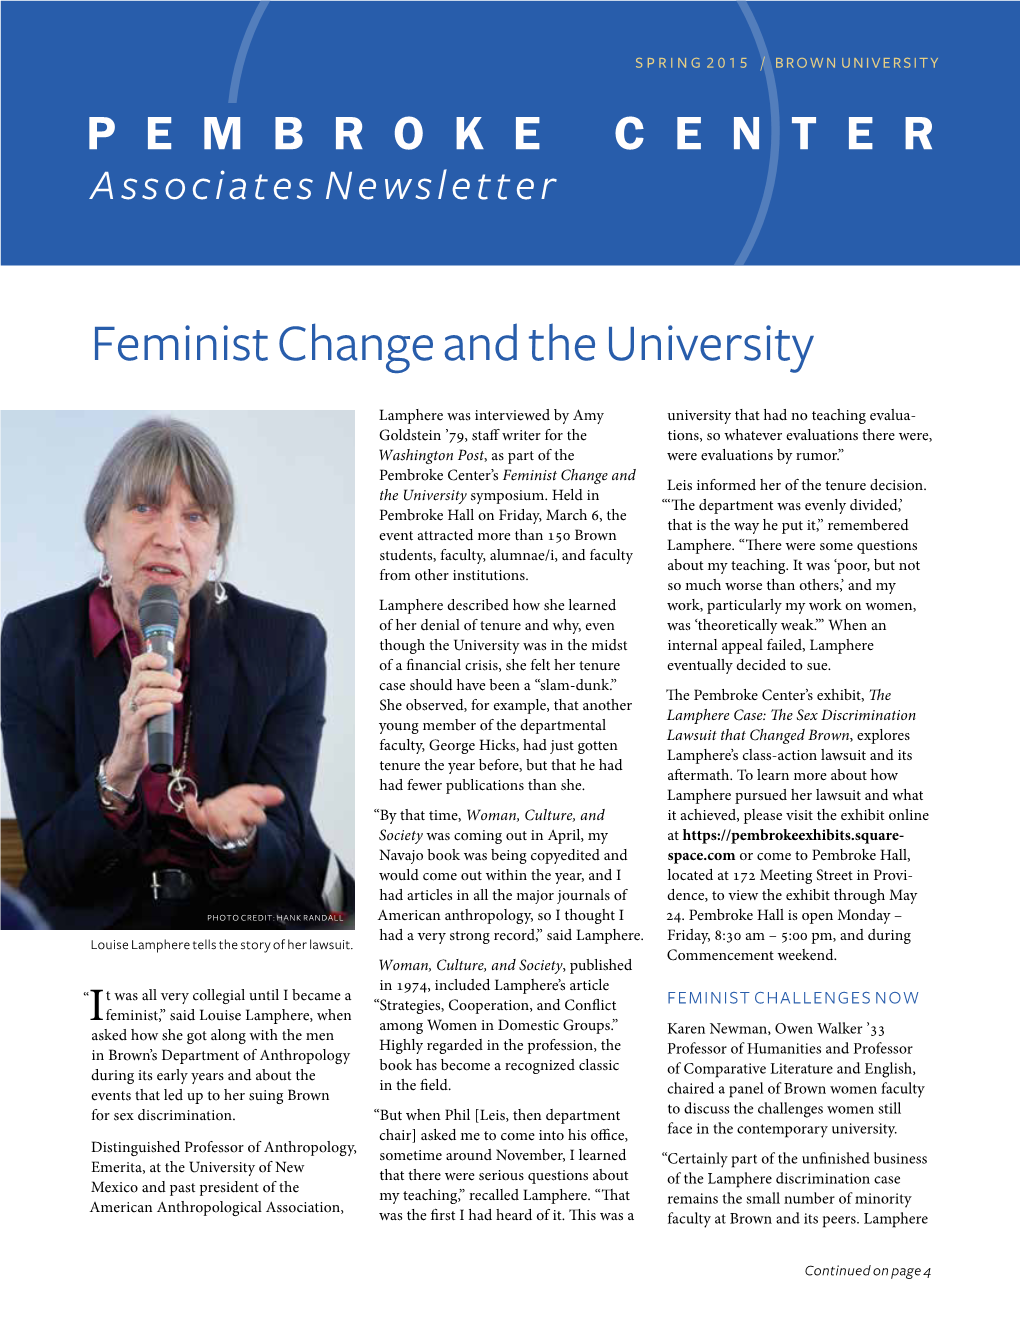 Feminist Change and the University